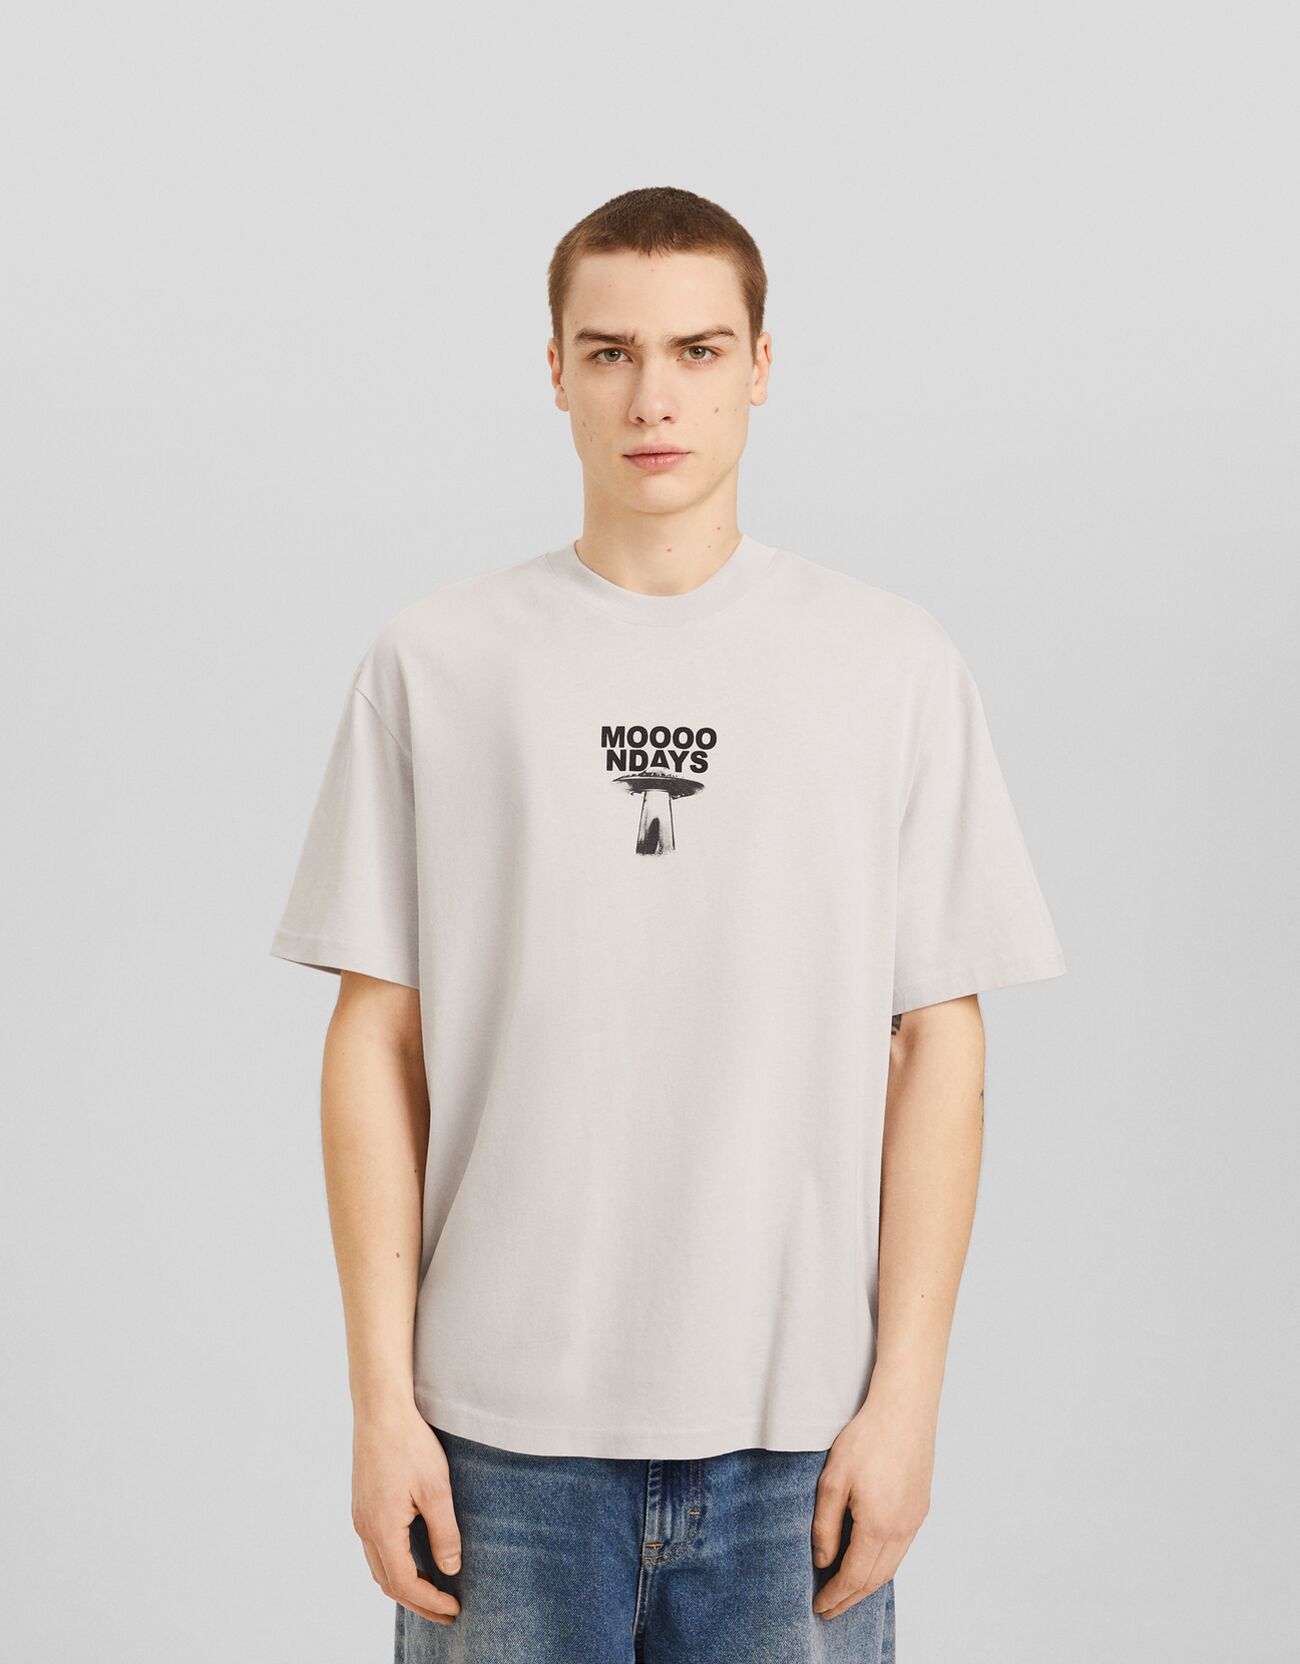 Boxy fit cropped short sleeve T-shirt - T-shirts - Men